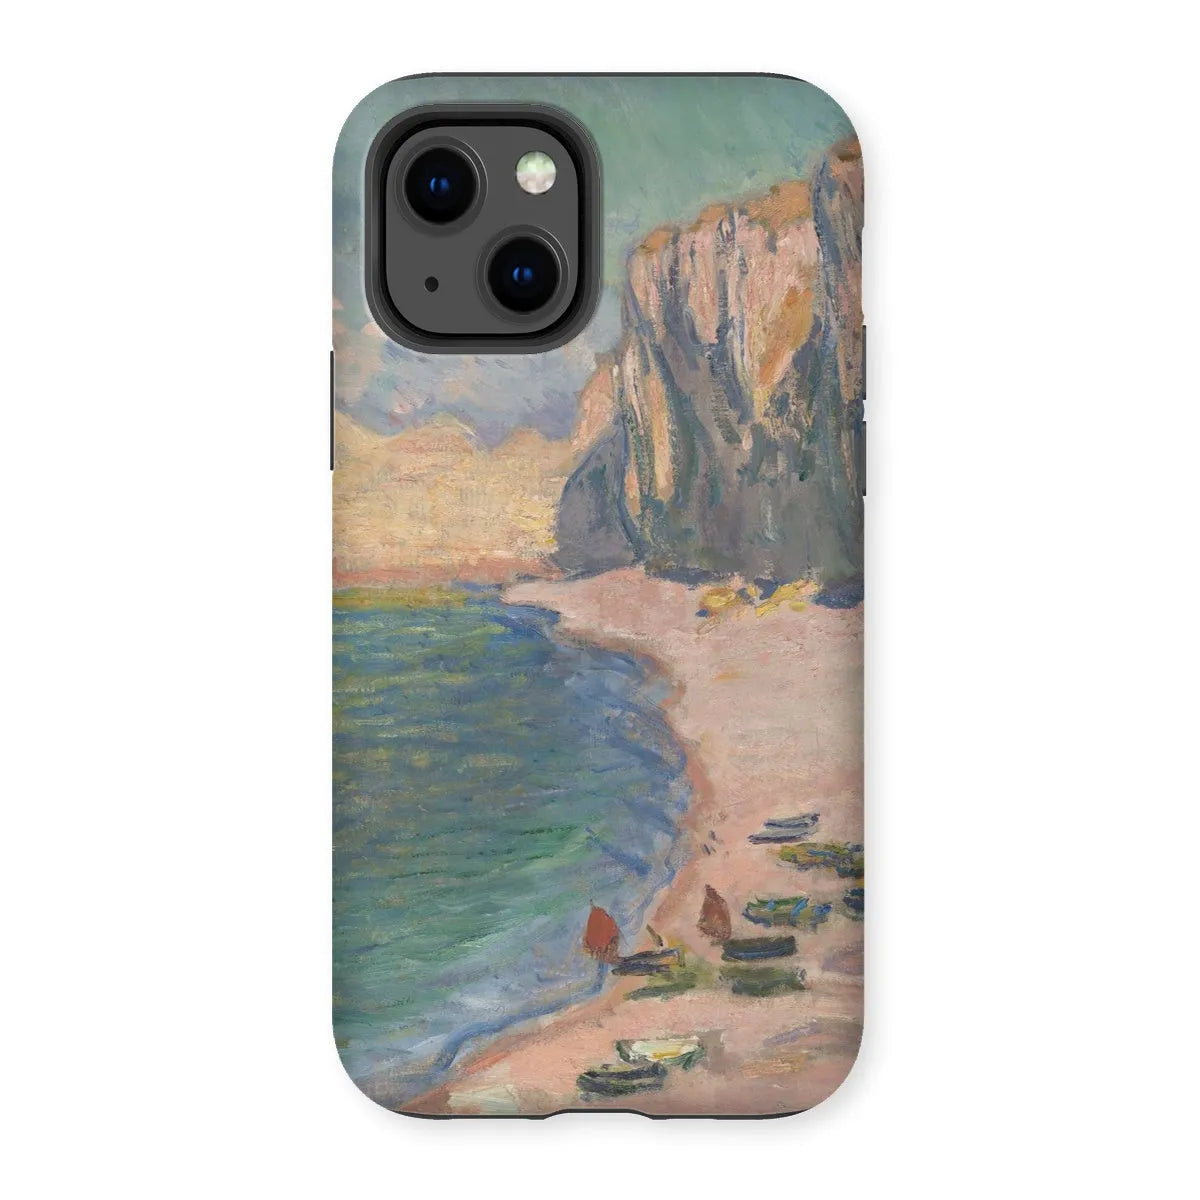 étretat - Impressionist Art Phone Case - Claude Monet - Iphone 13 / Matte - Mobile Phone Cases - Aesthetic Art